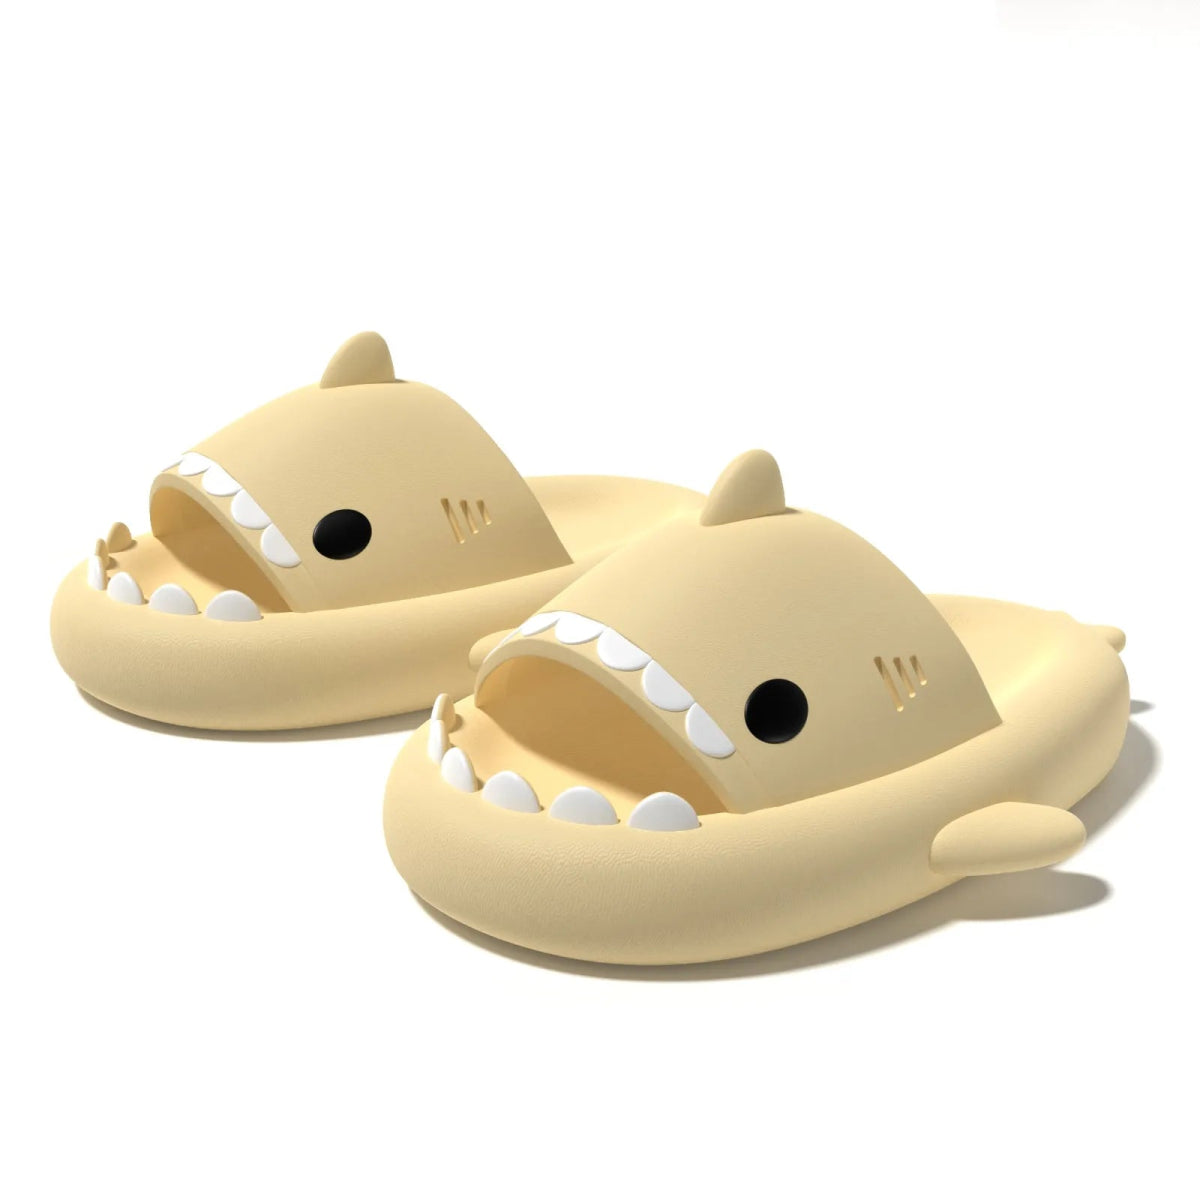 Cute Shark Slippers Unisex - Prestige & Style